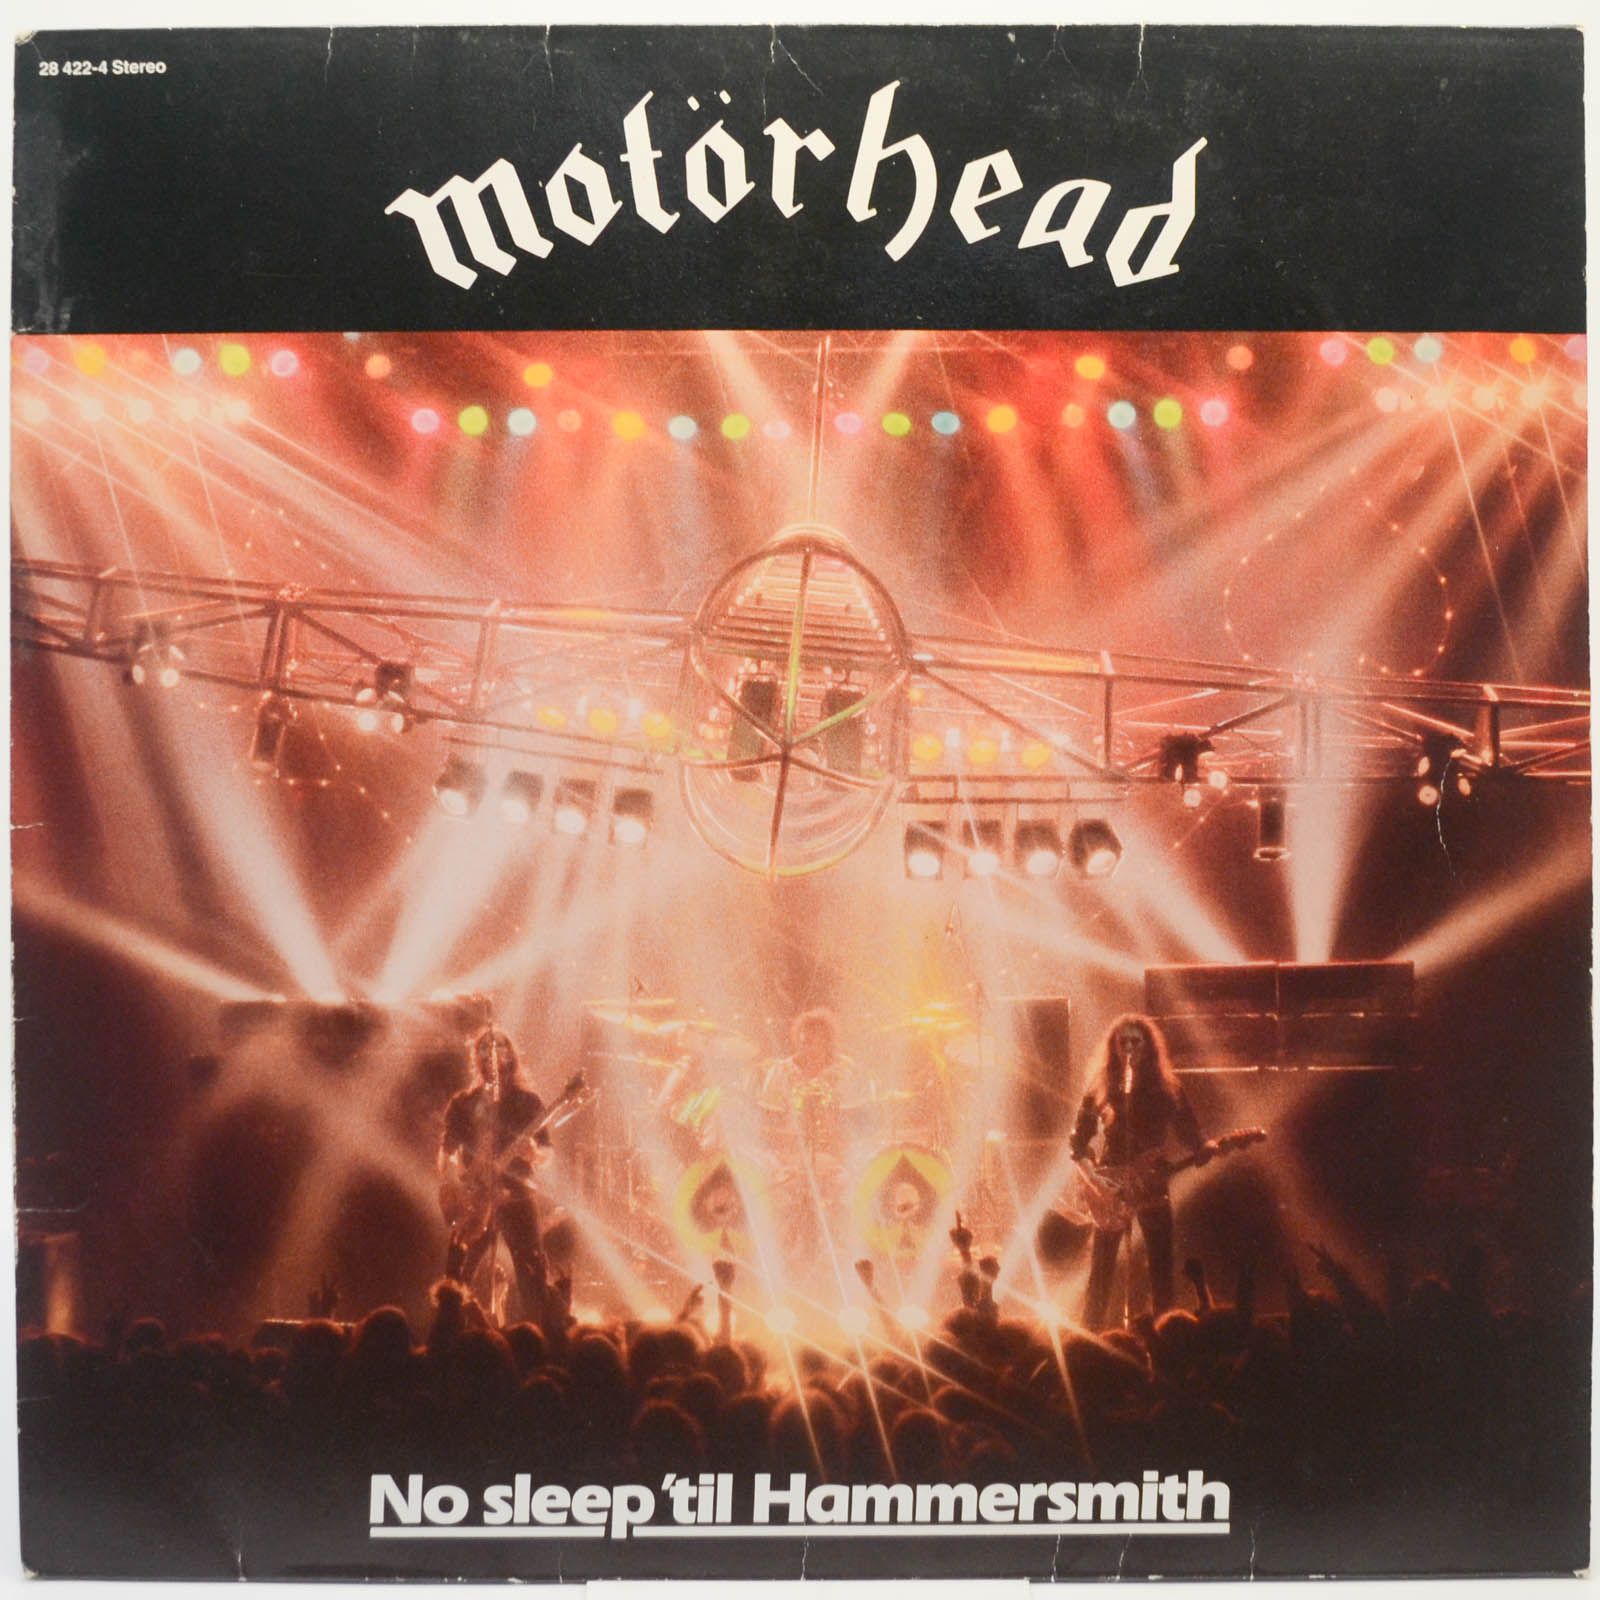 Motörhead — No Sleep 'til Hammersmith, 1981